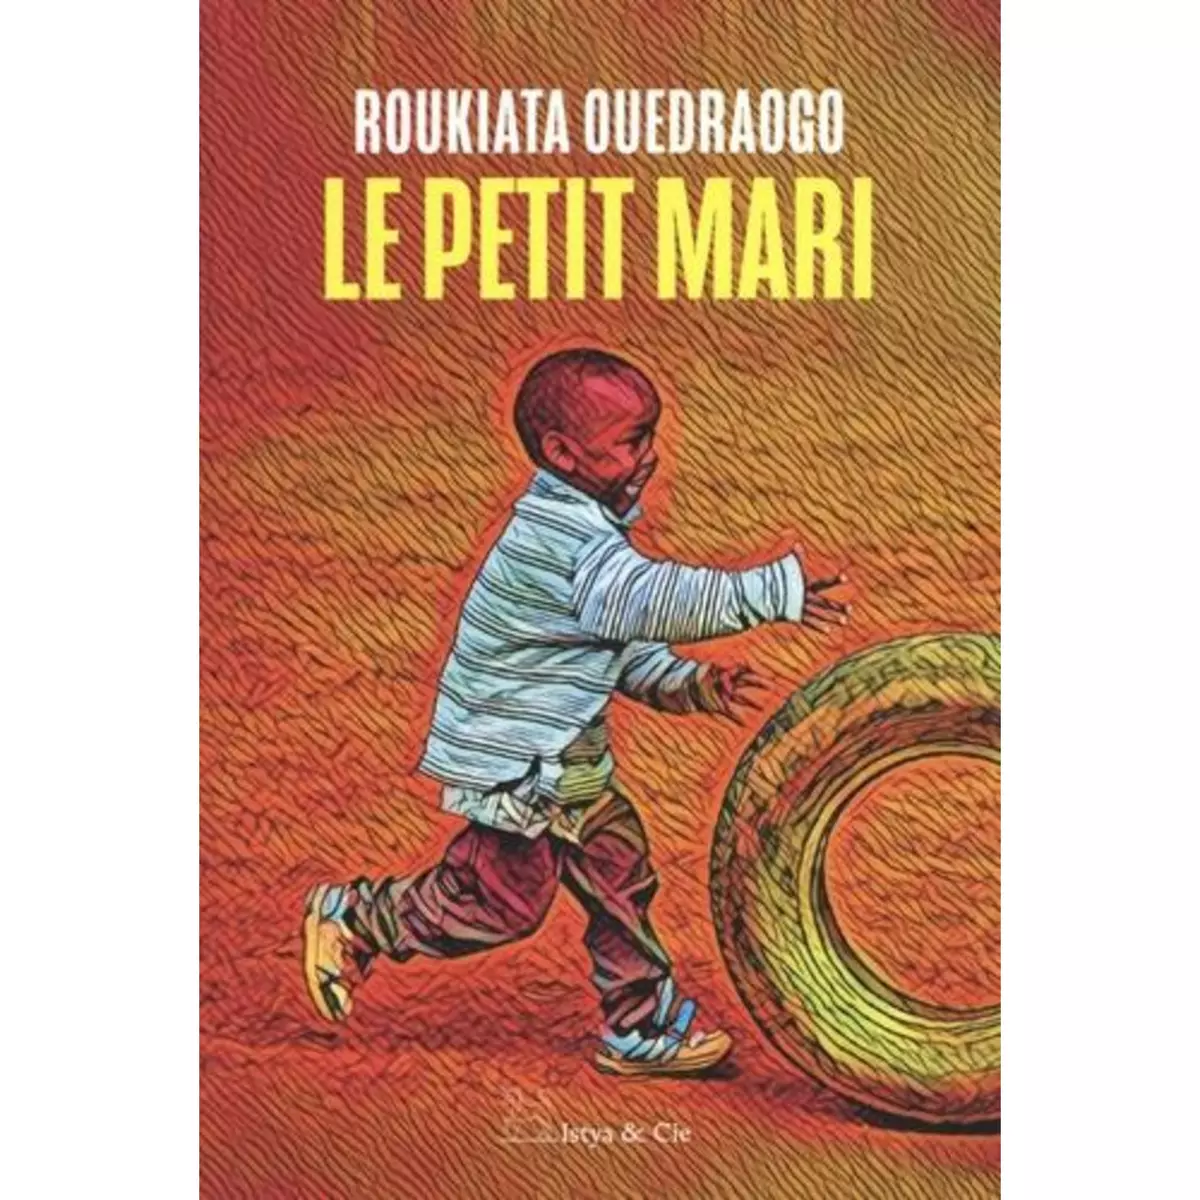  LE PETIT MARI, Ouedraogo Roukiata